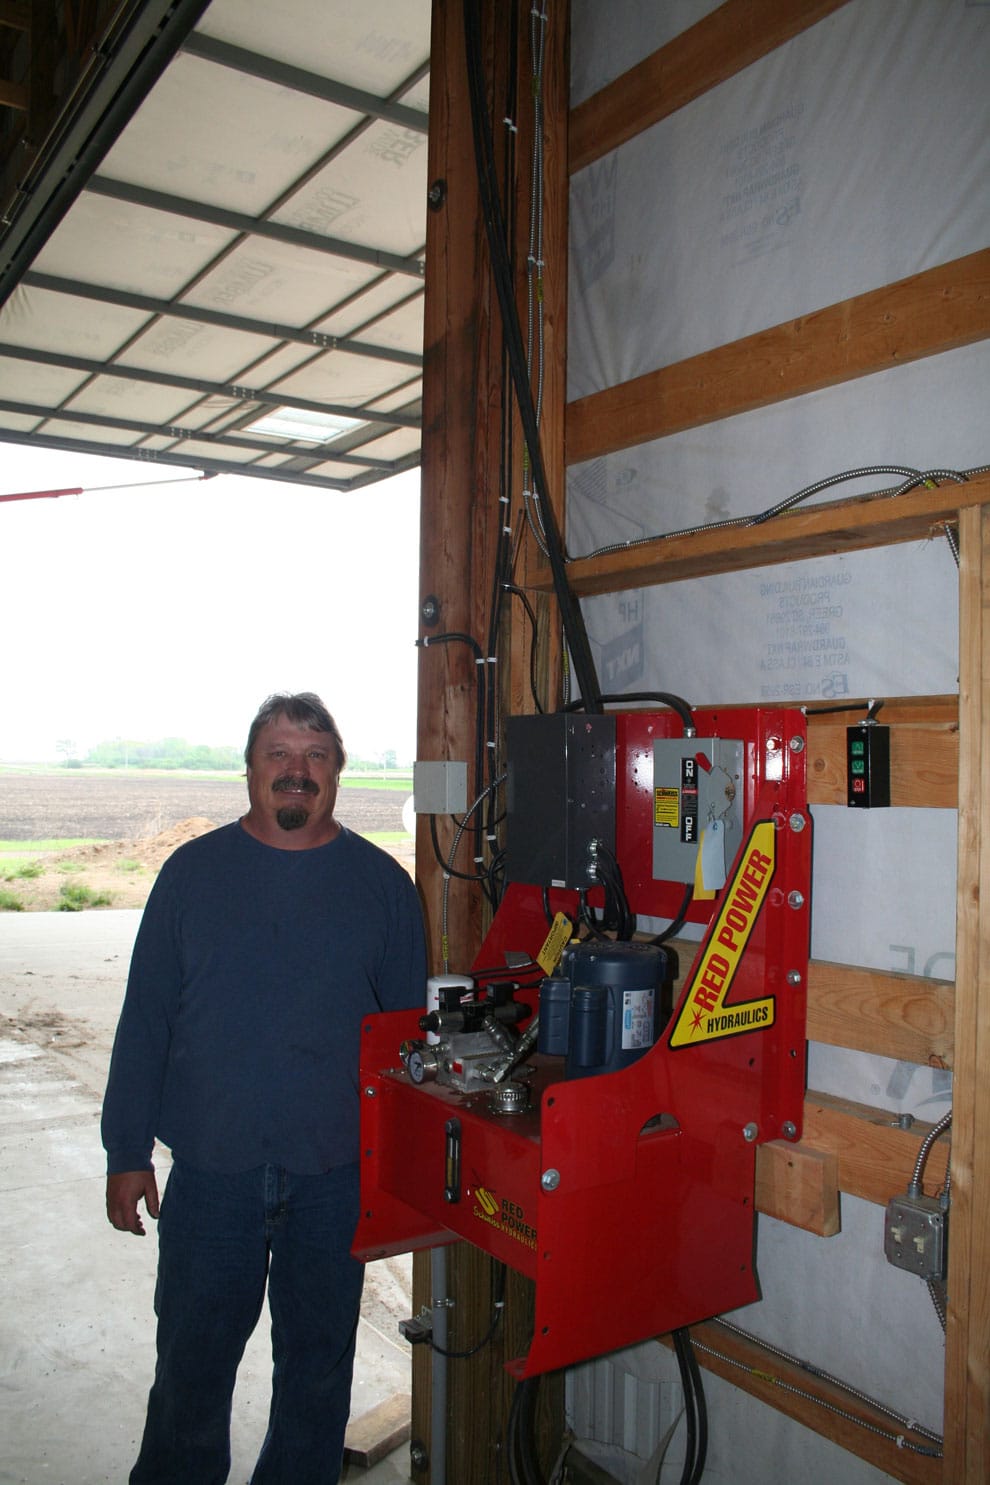 Red Power hydraulic pump conviently near the door